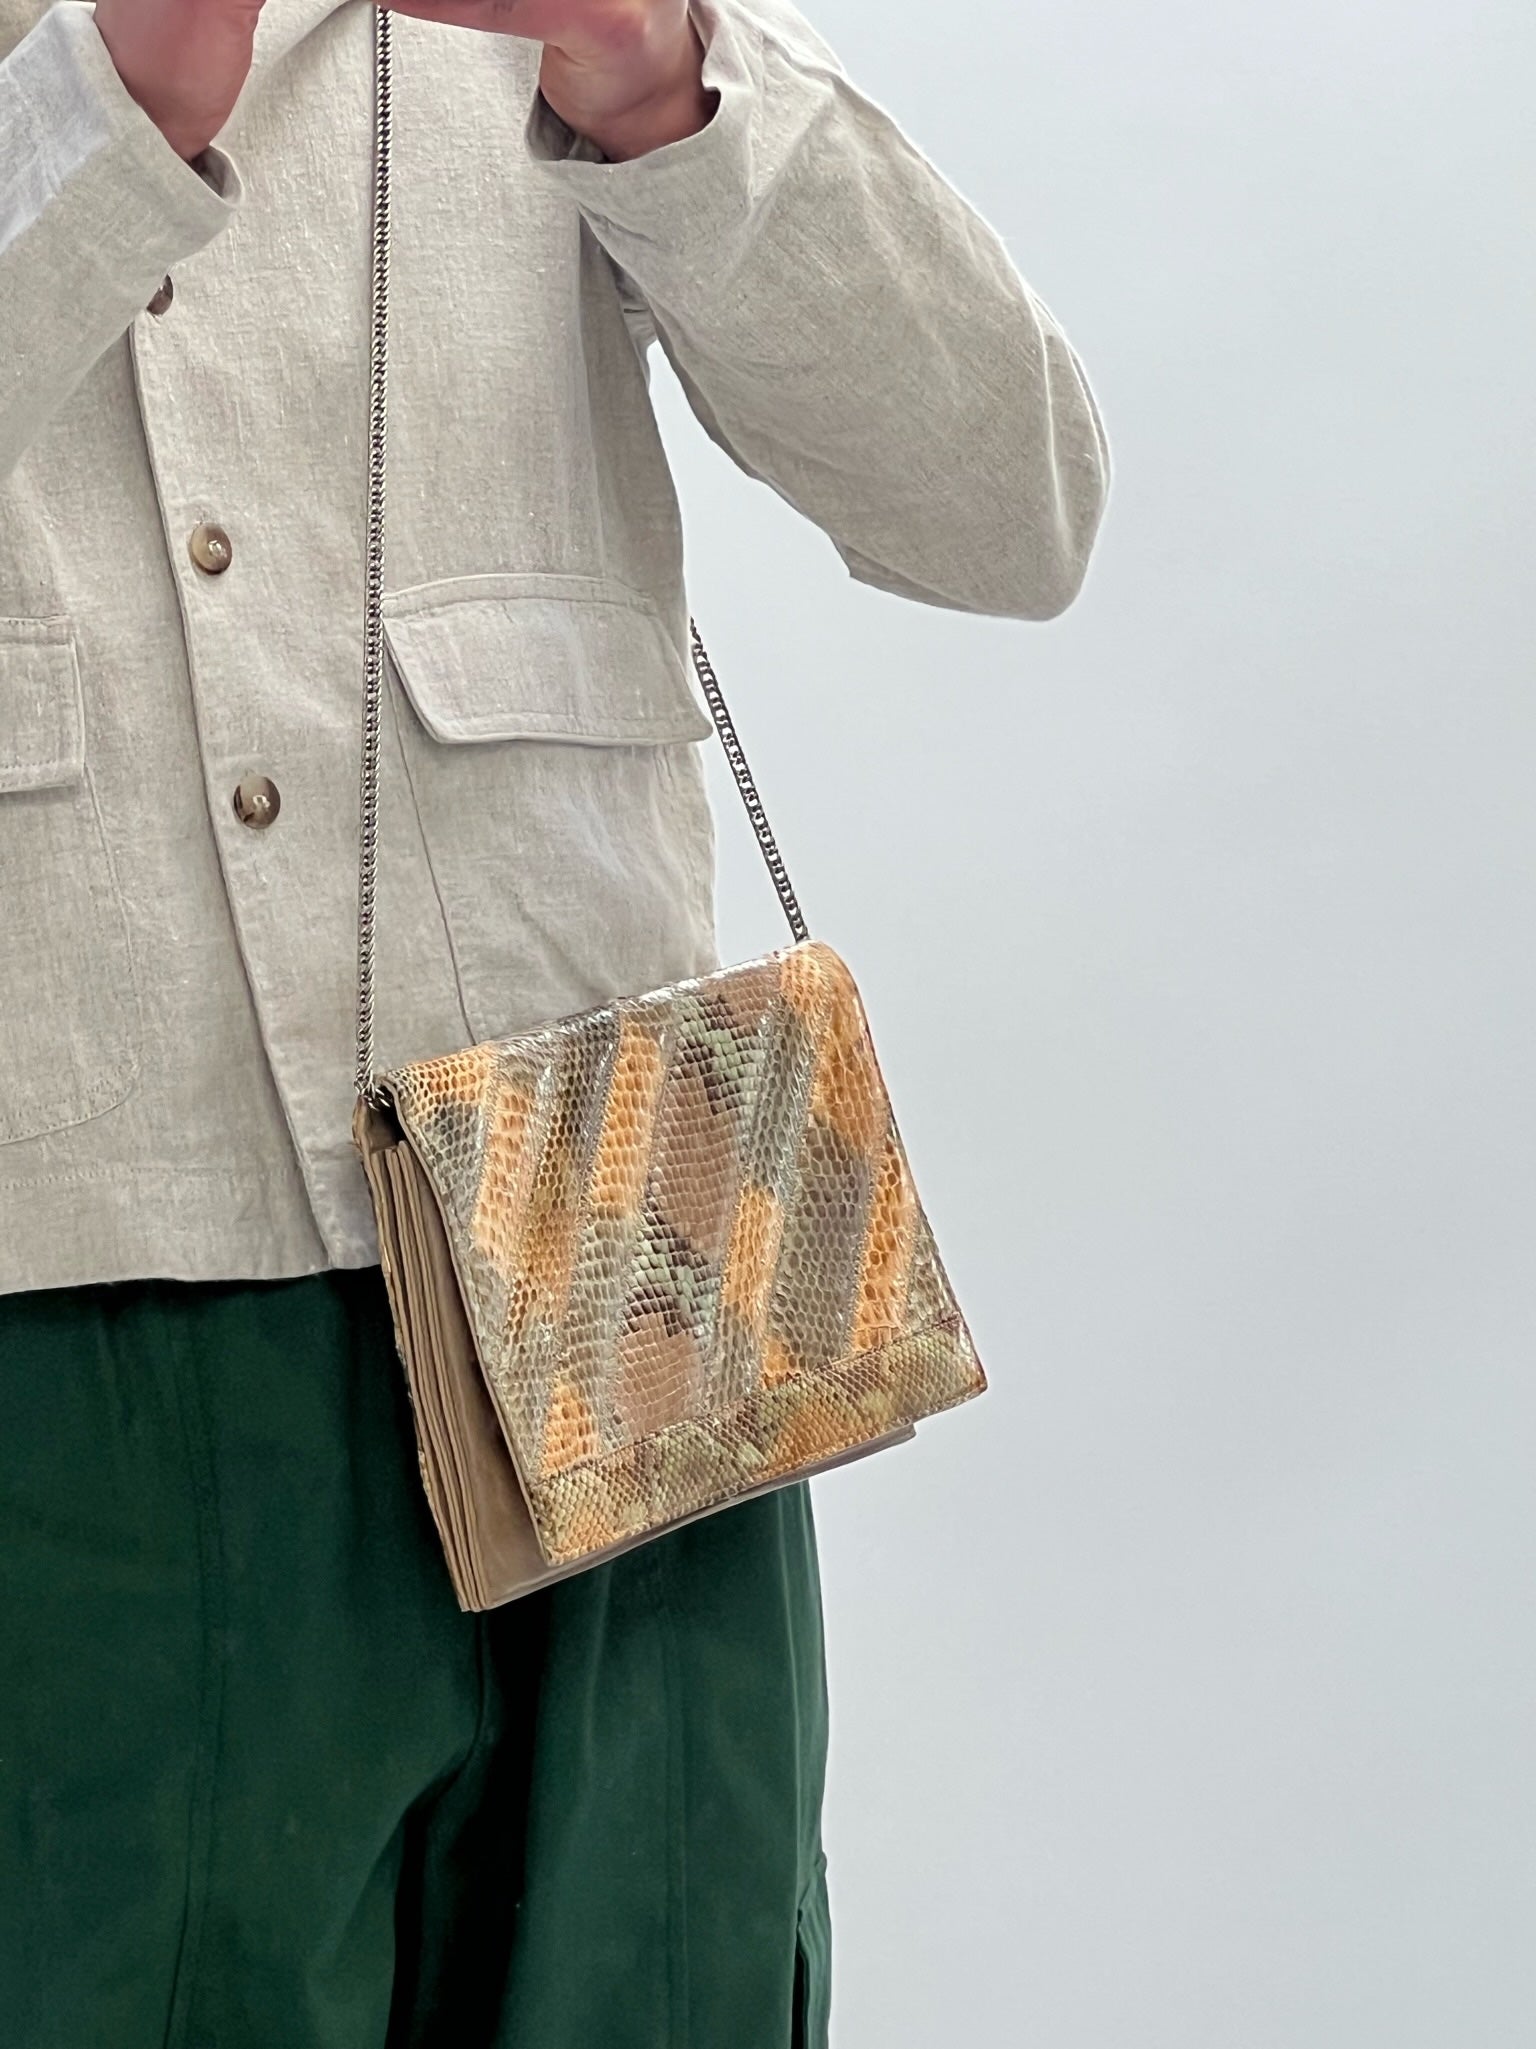 Carry your lippy in style. Mini bag. Fashion handbag. Fashion accessory.  Vintage or retro clutch design.